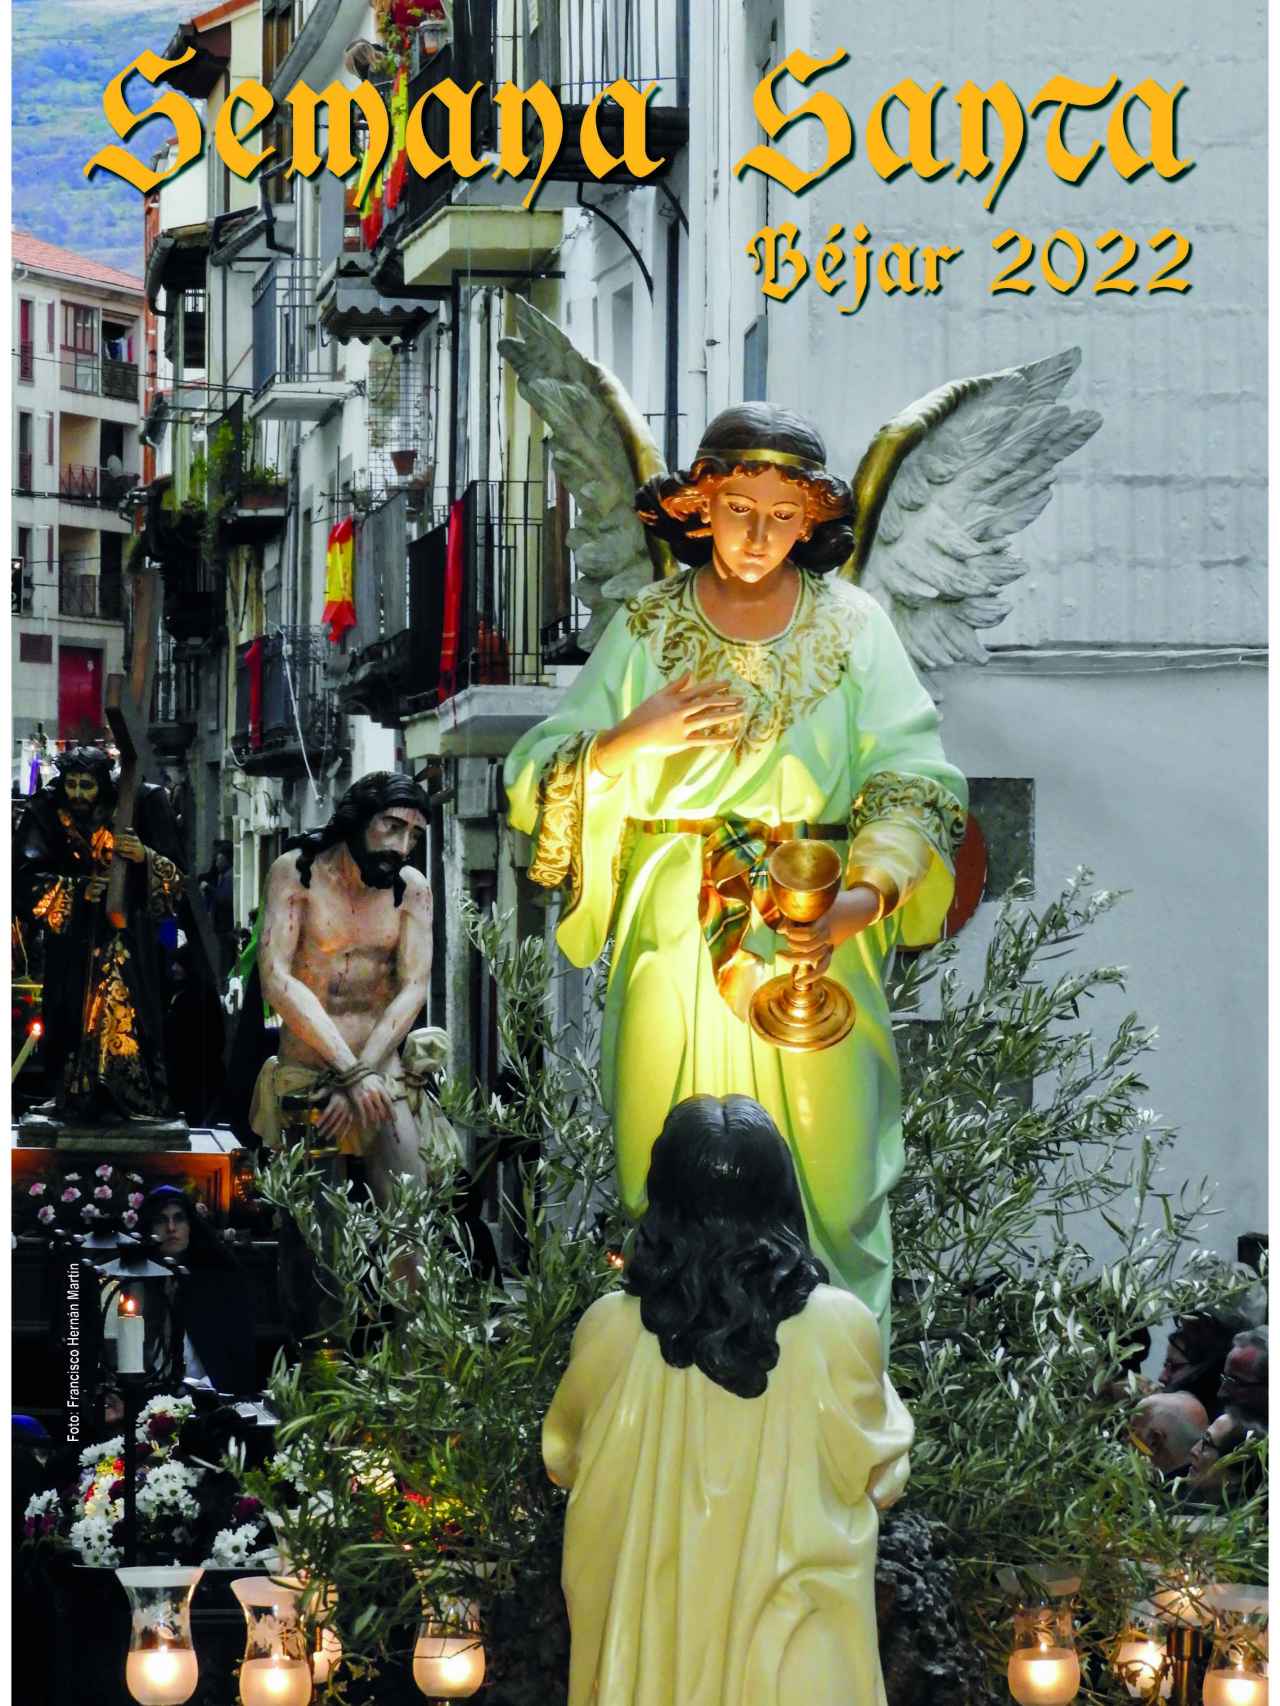 Cartel Semana Santa de Béjar 2022